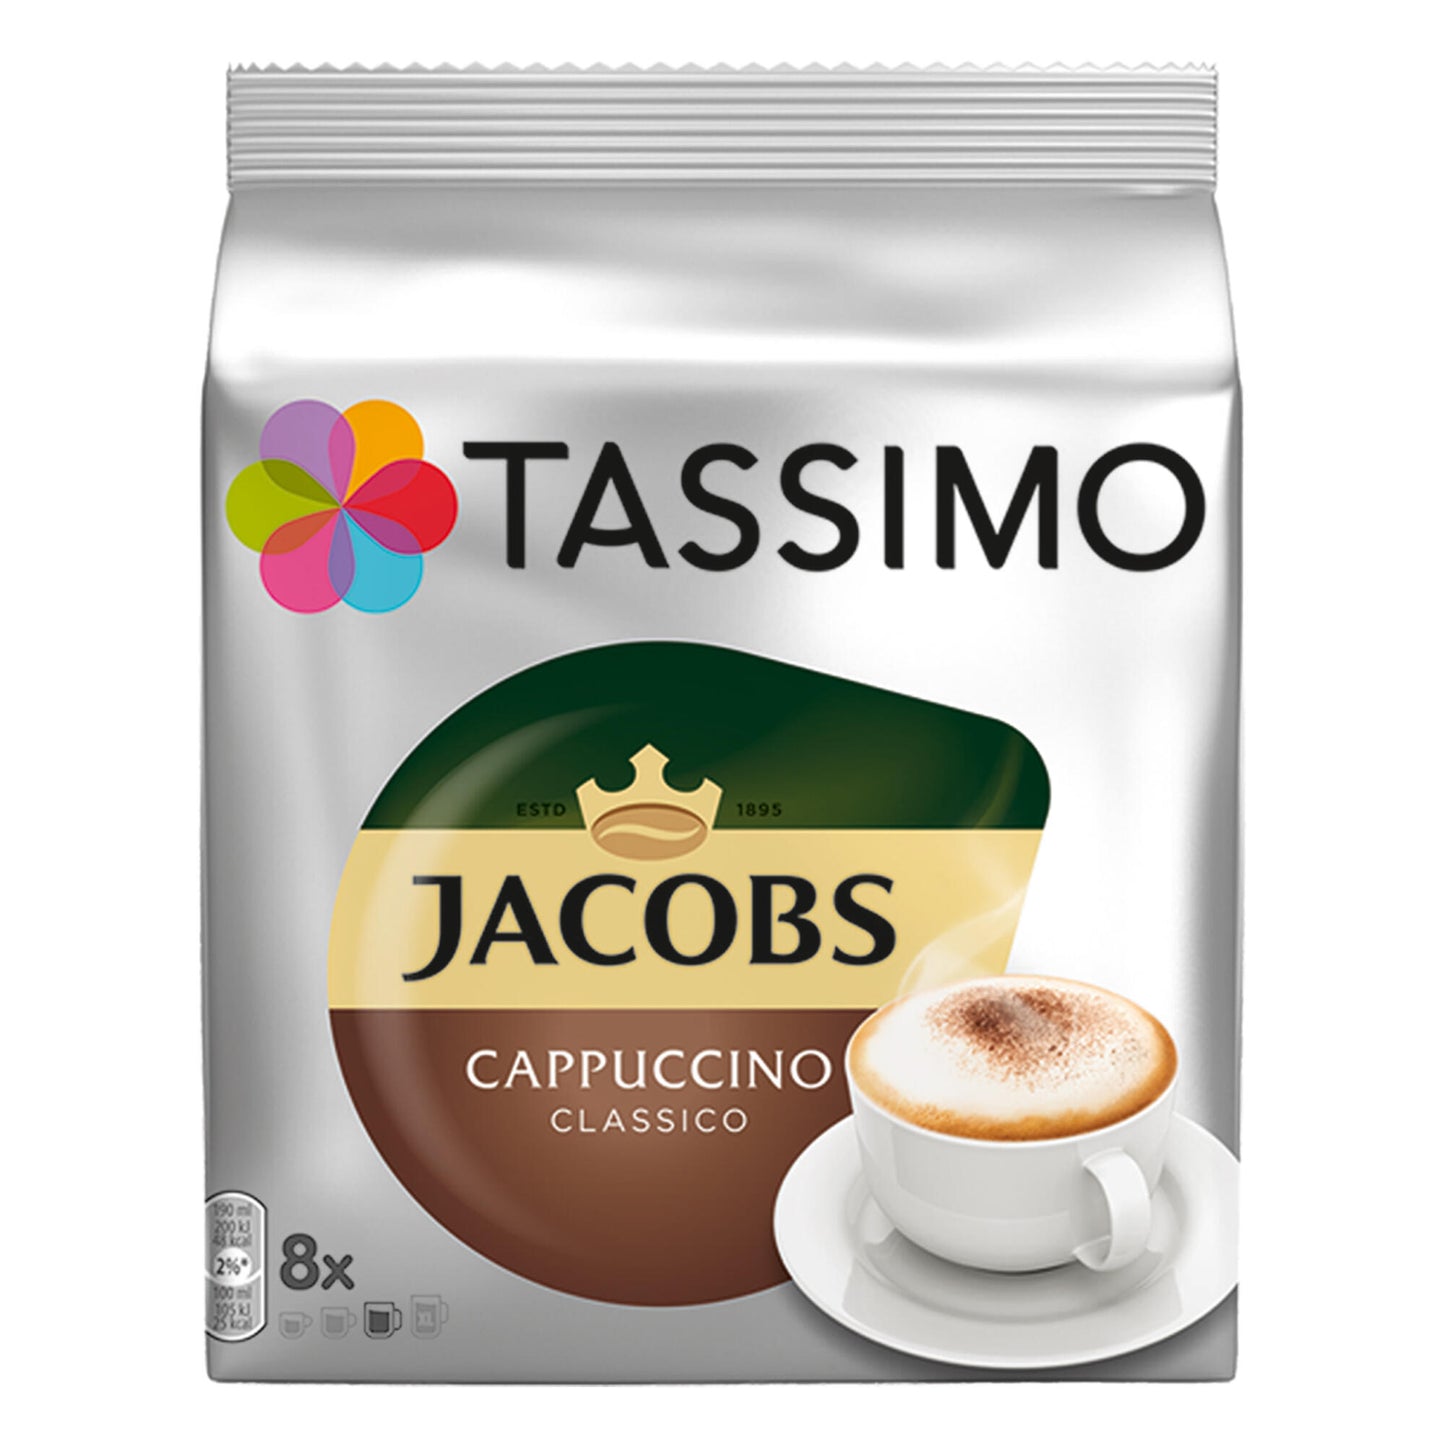 Tassimo Jacobs Cappuccino Kaffee, Kaffeekapseln gemahlener Röstkaffee, 16 T-Discs (8 Portionen)